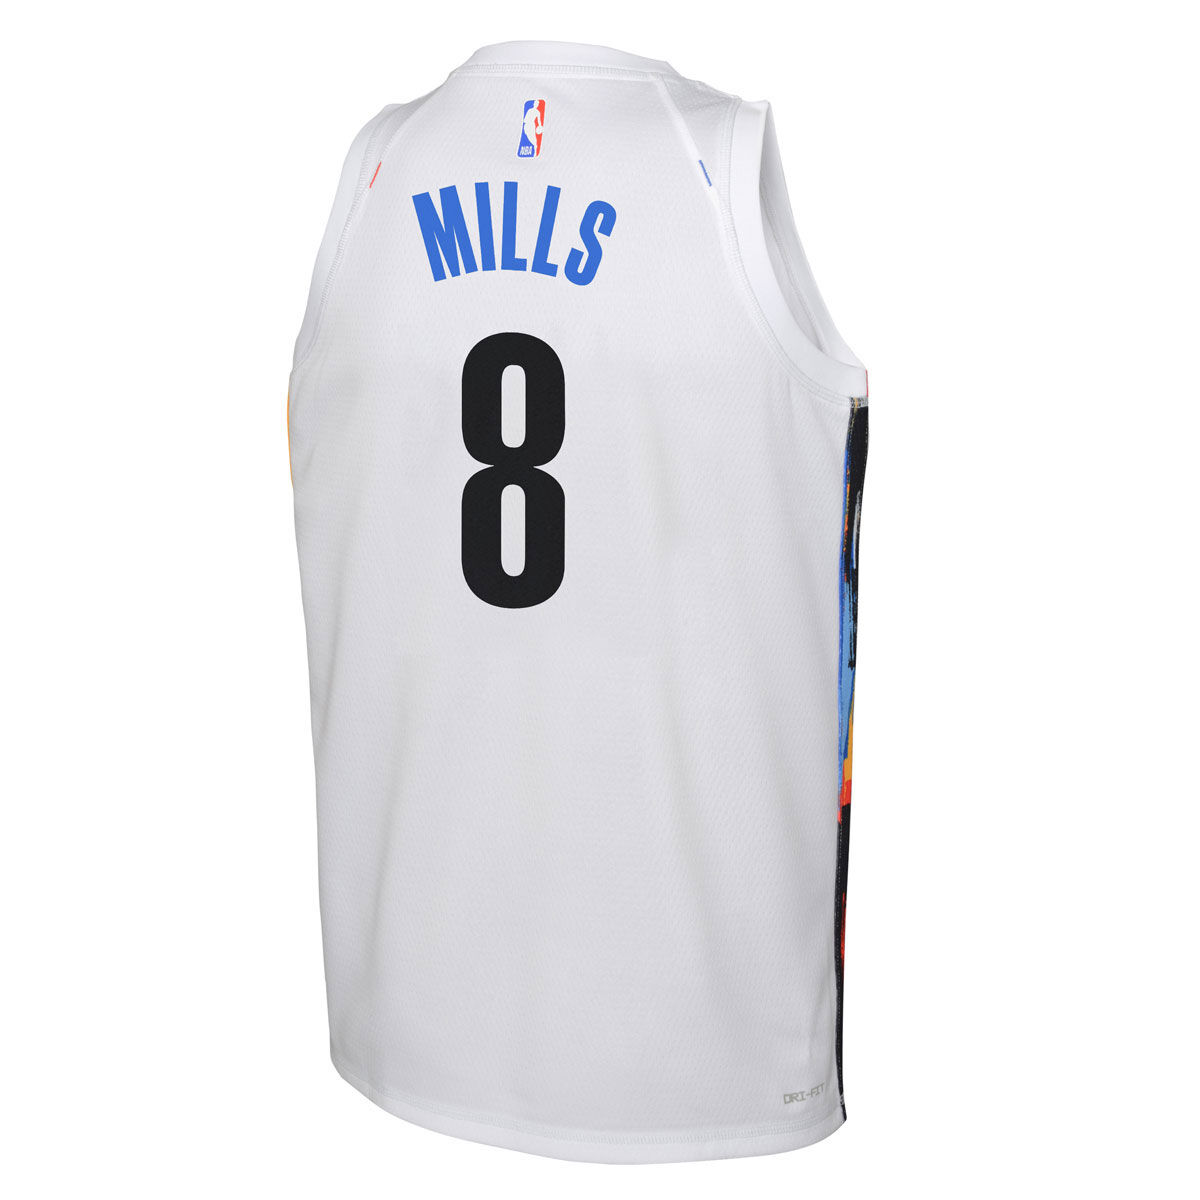 Drazen Petrovic Brooklyn Nets Mitchell & Ness Hardwood Classics Name &  Number Player T-Shirt - Royal